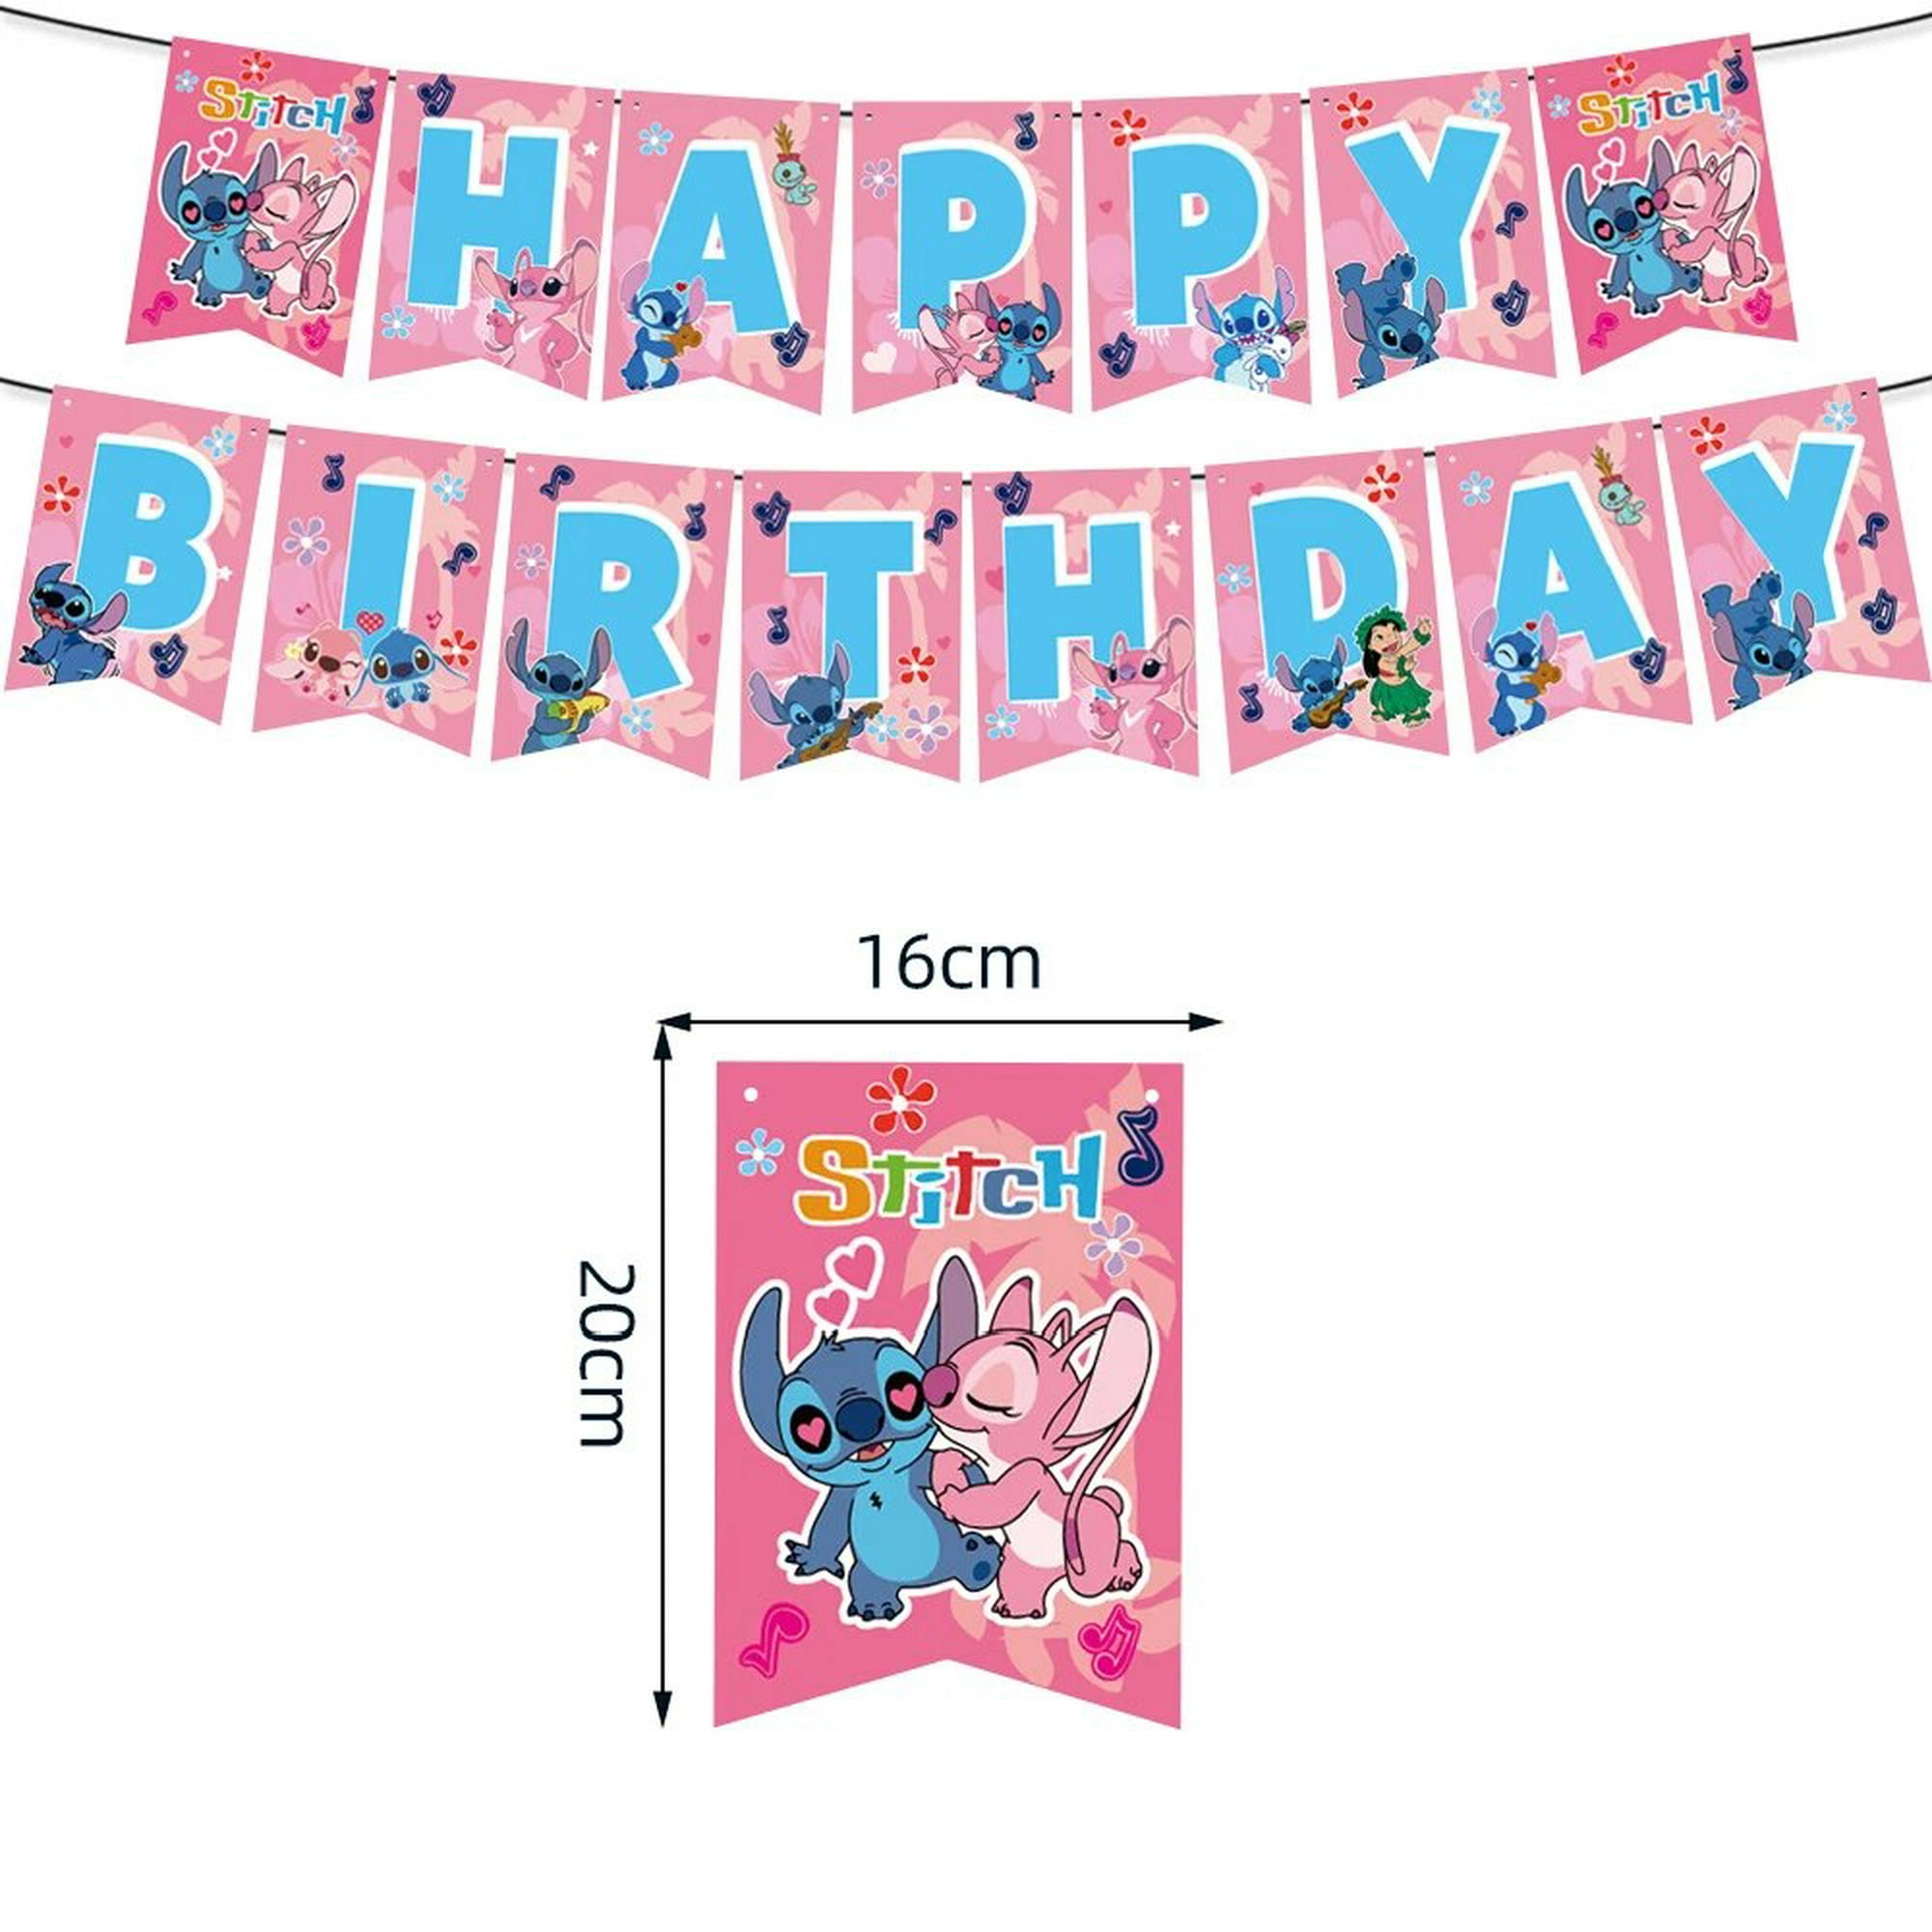 Suministros de fiesta de cumpleaños de Lilo Stitch, plato de papel